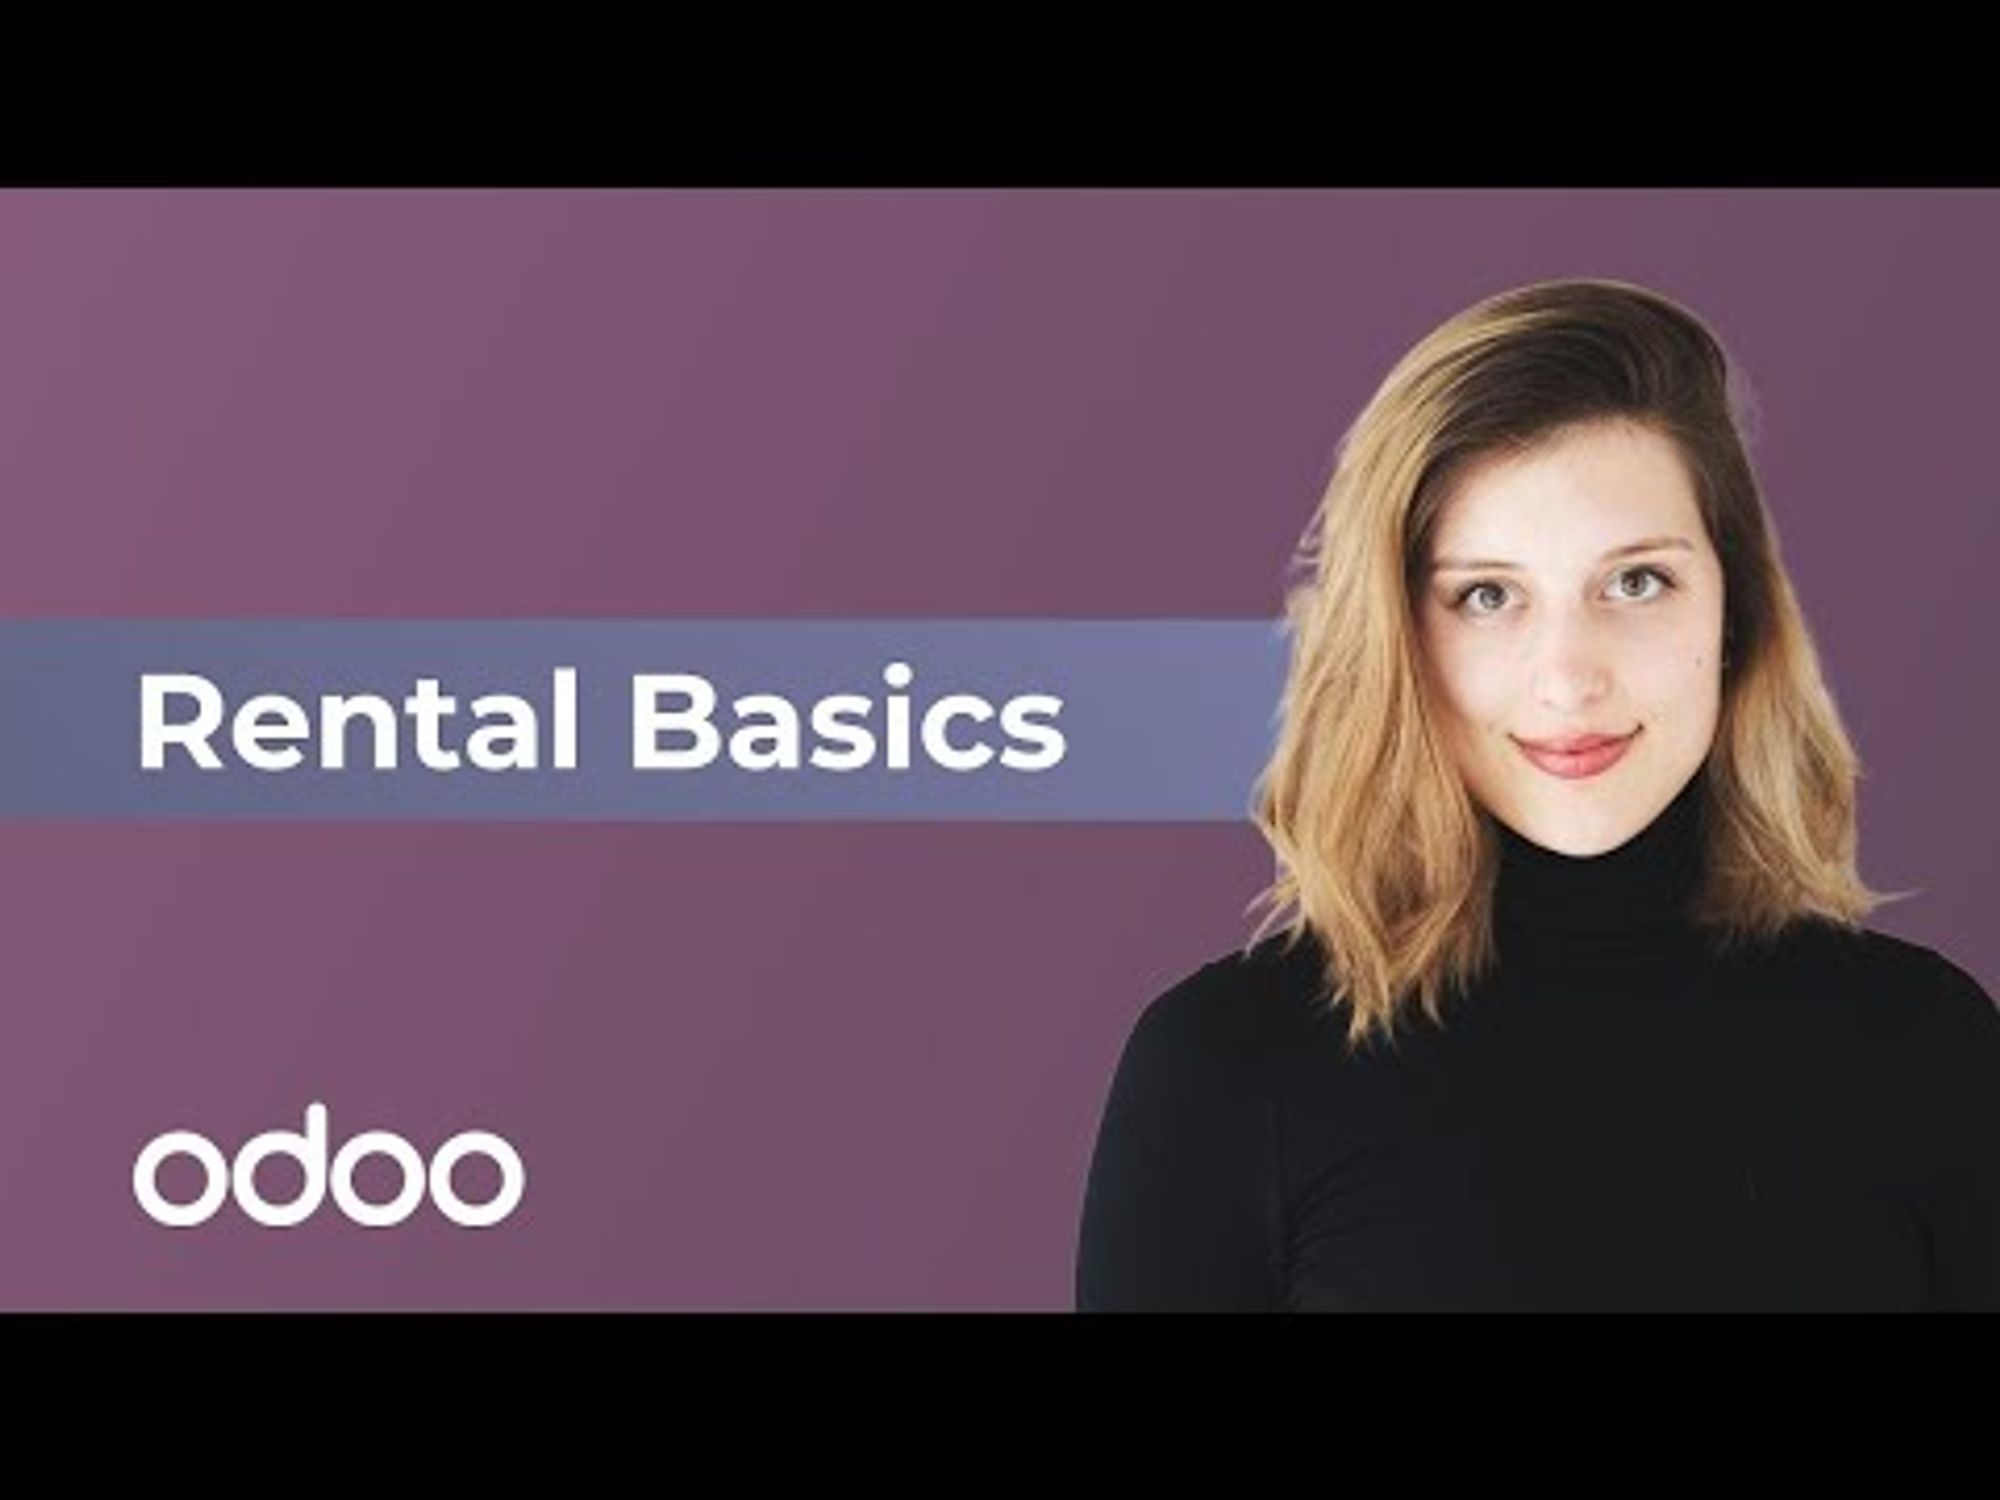 Rental Basics | Odoo Rental